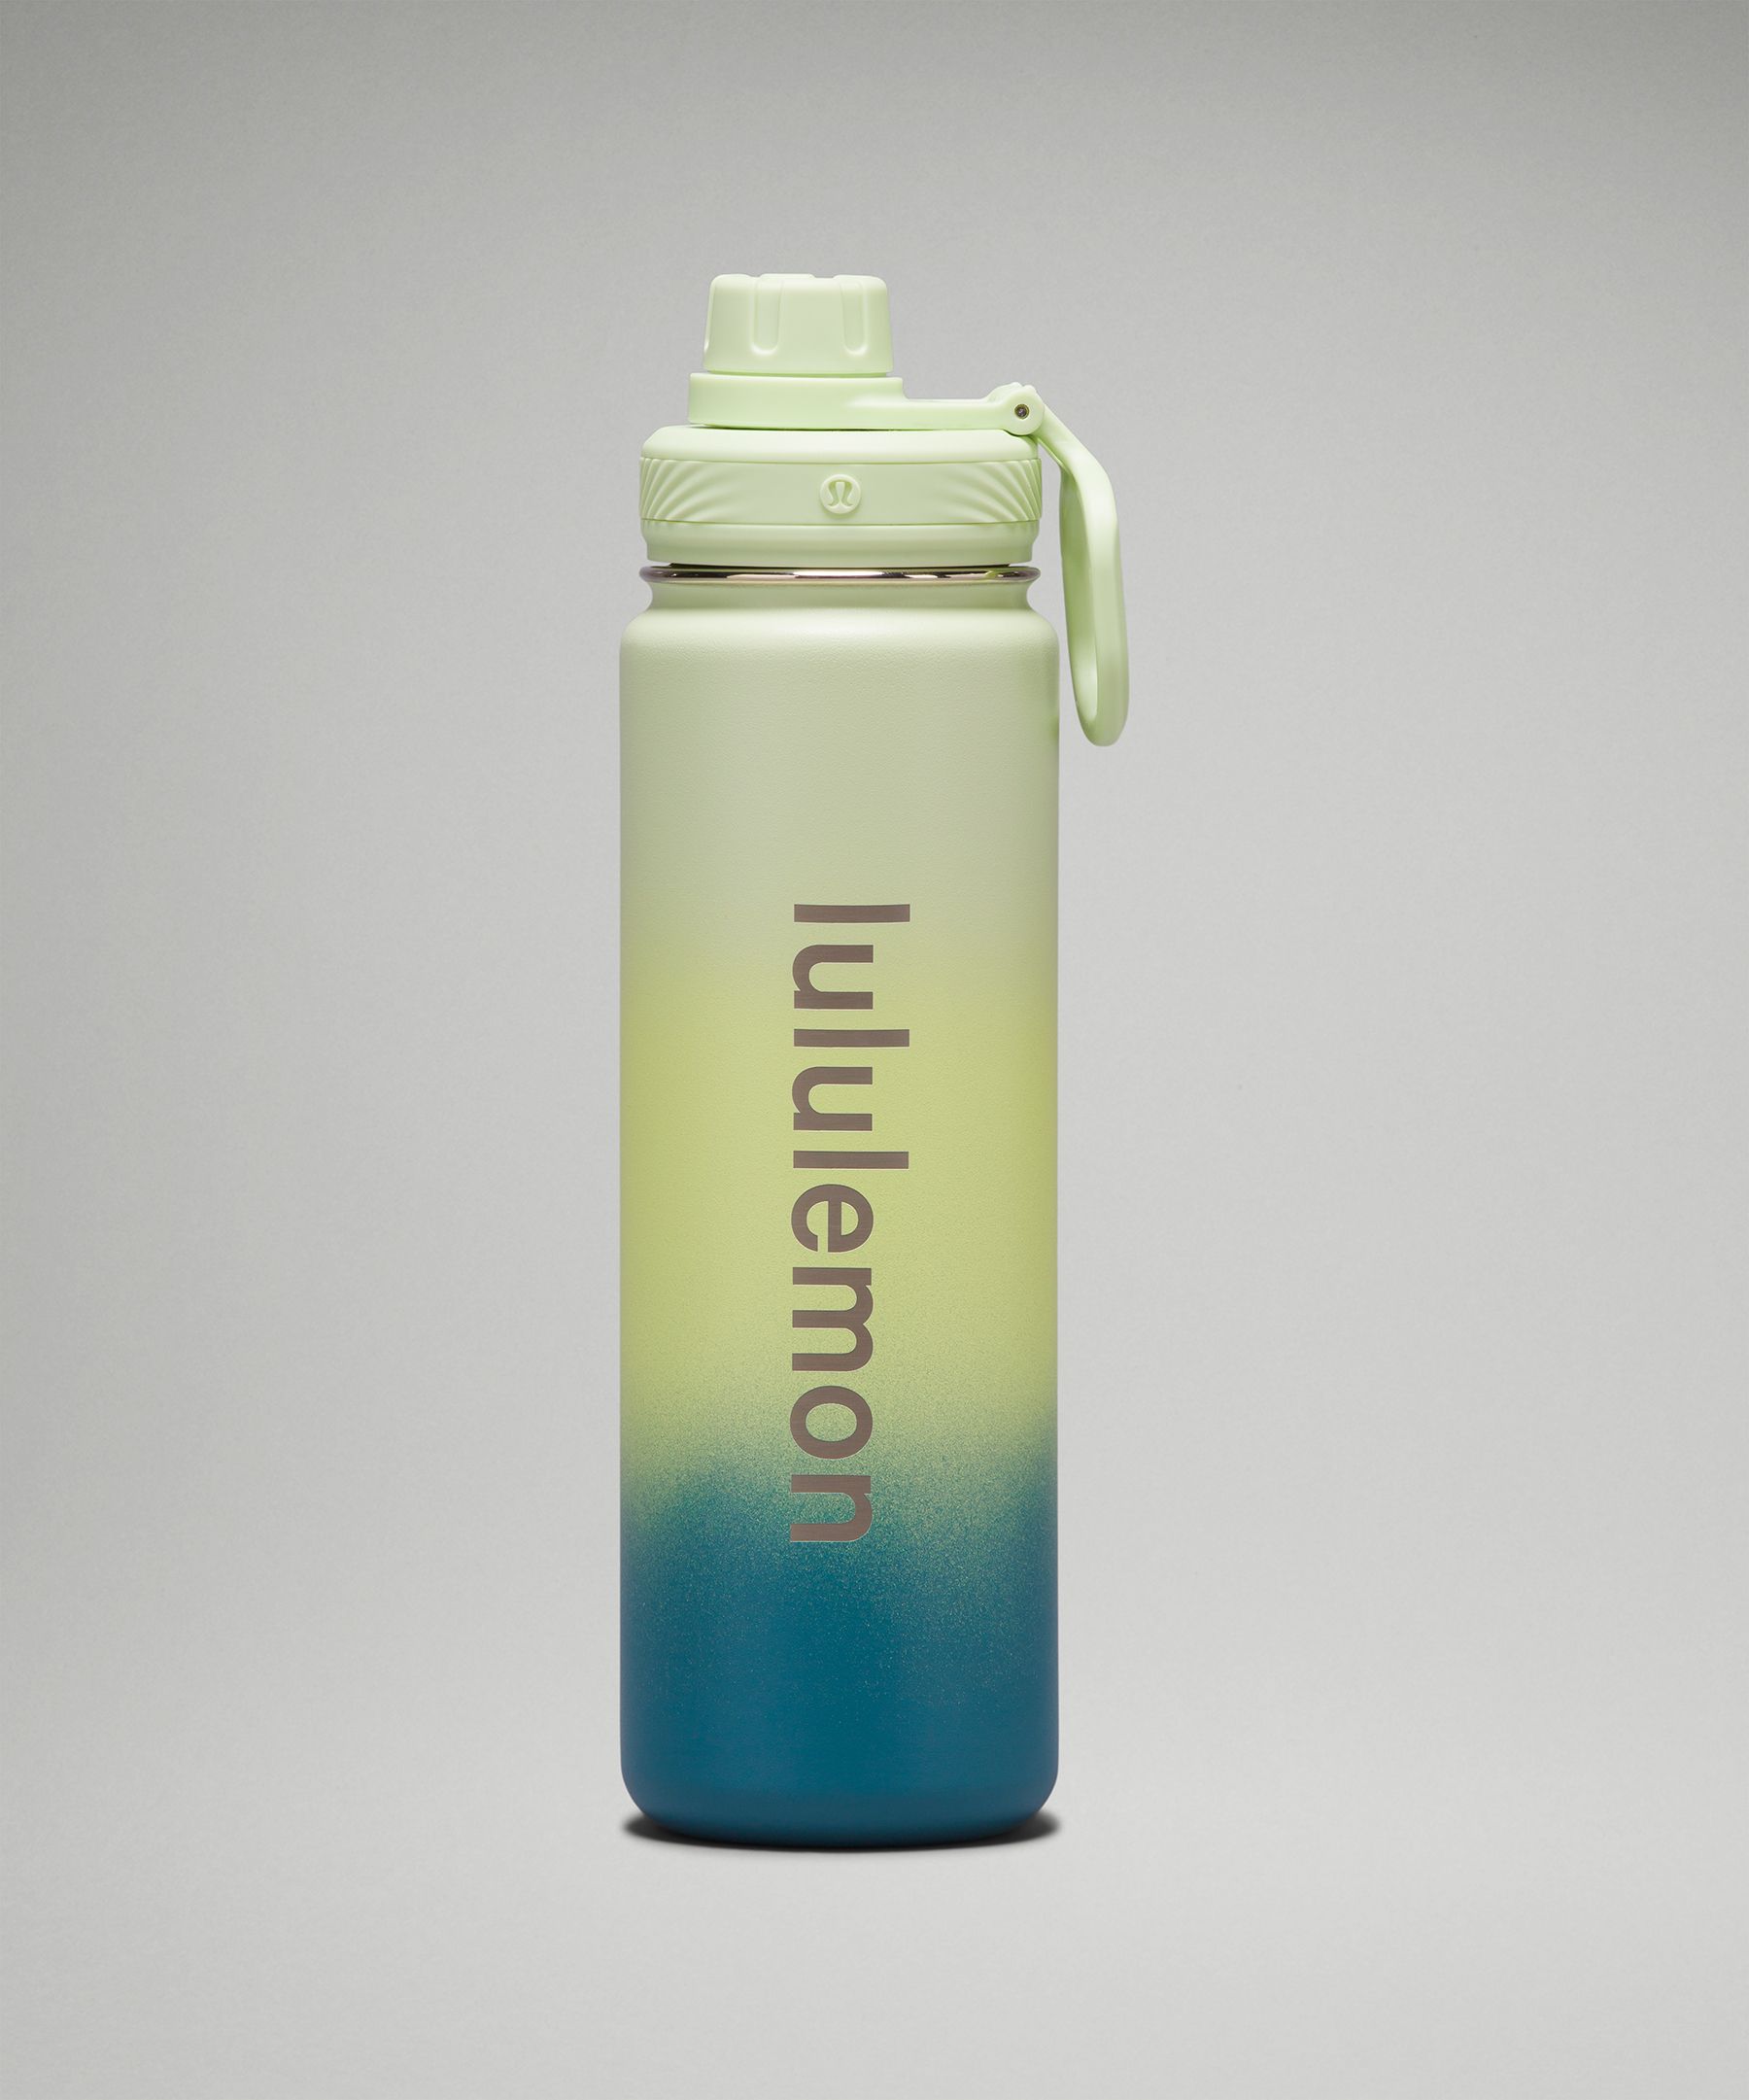 Lululemon water bottles personalized engraving at HK store : r/lululemon